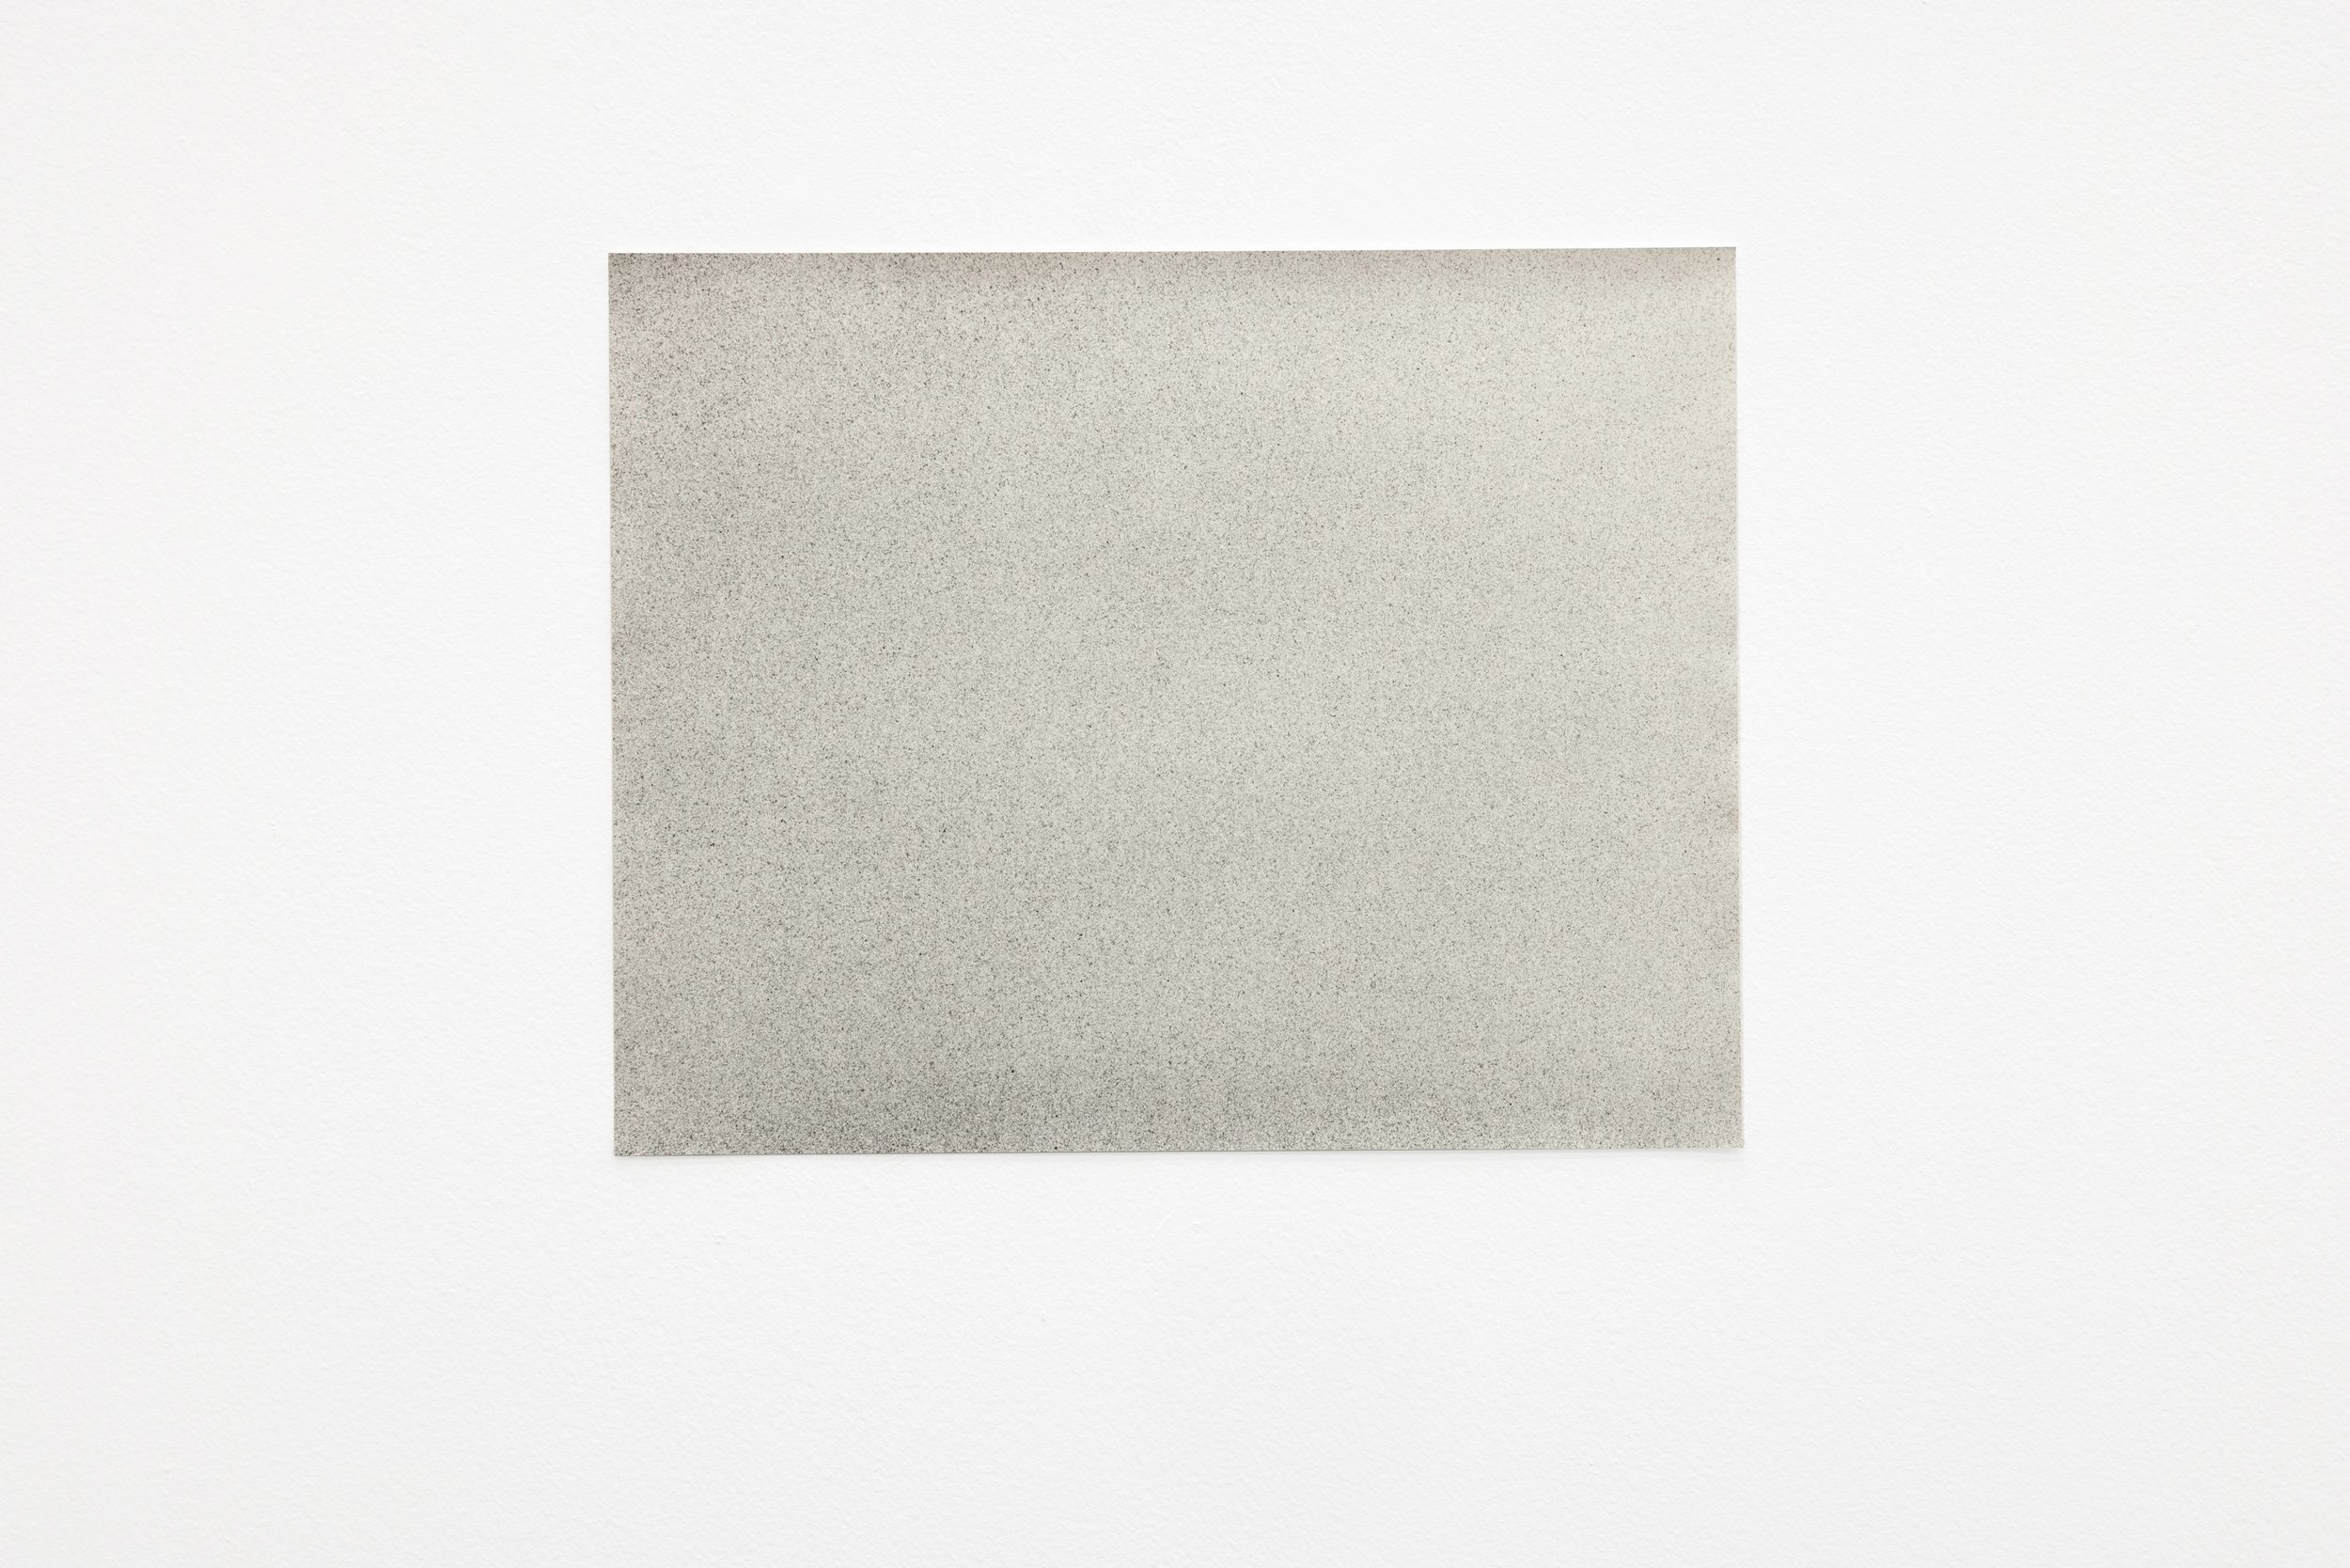  Sand, 2020, silver gelatin print, 39 x 49 cm, edition 5/5   